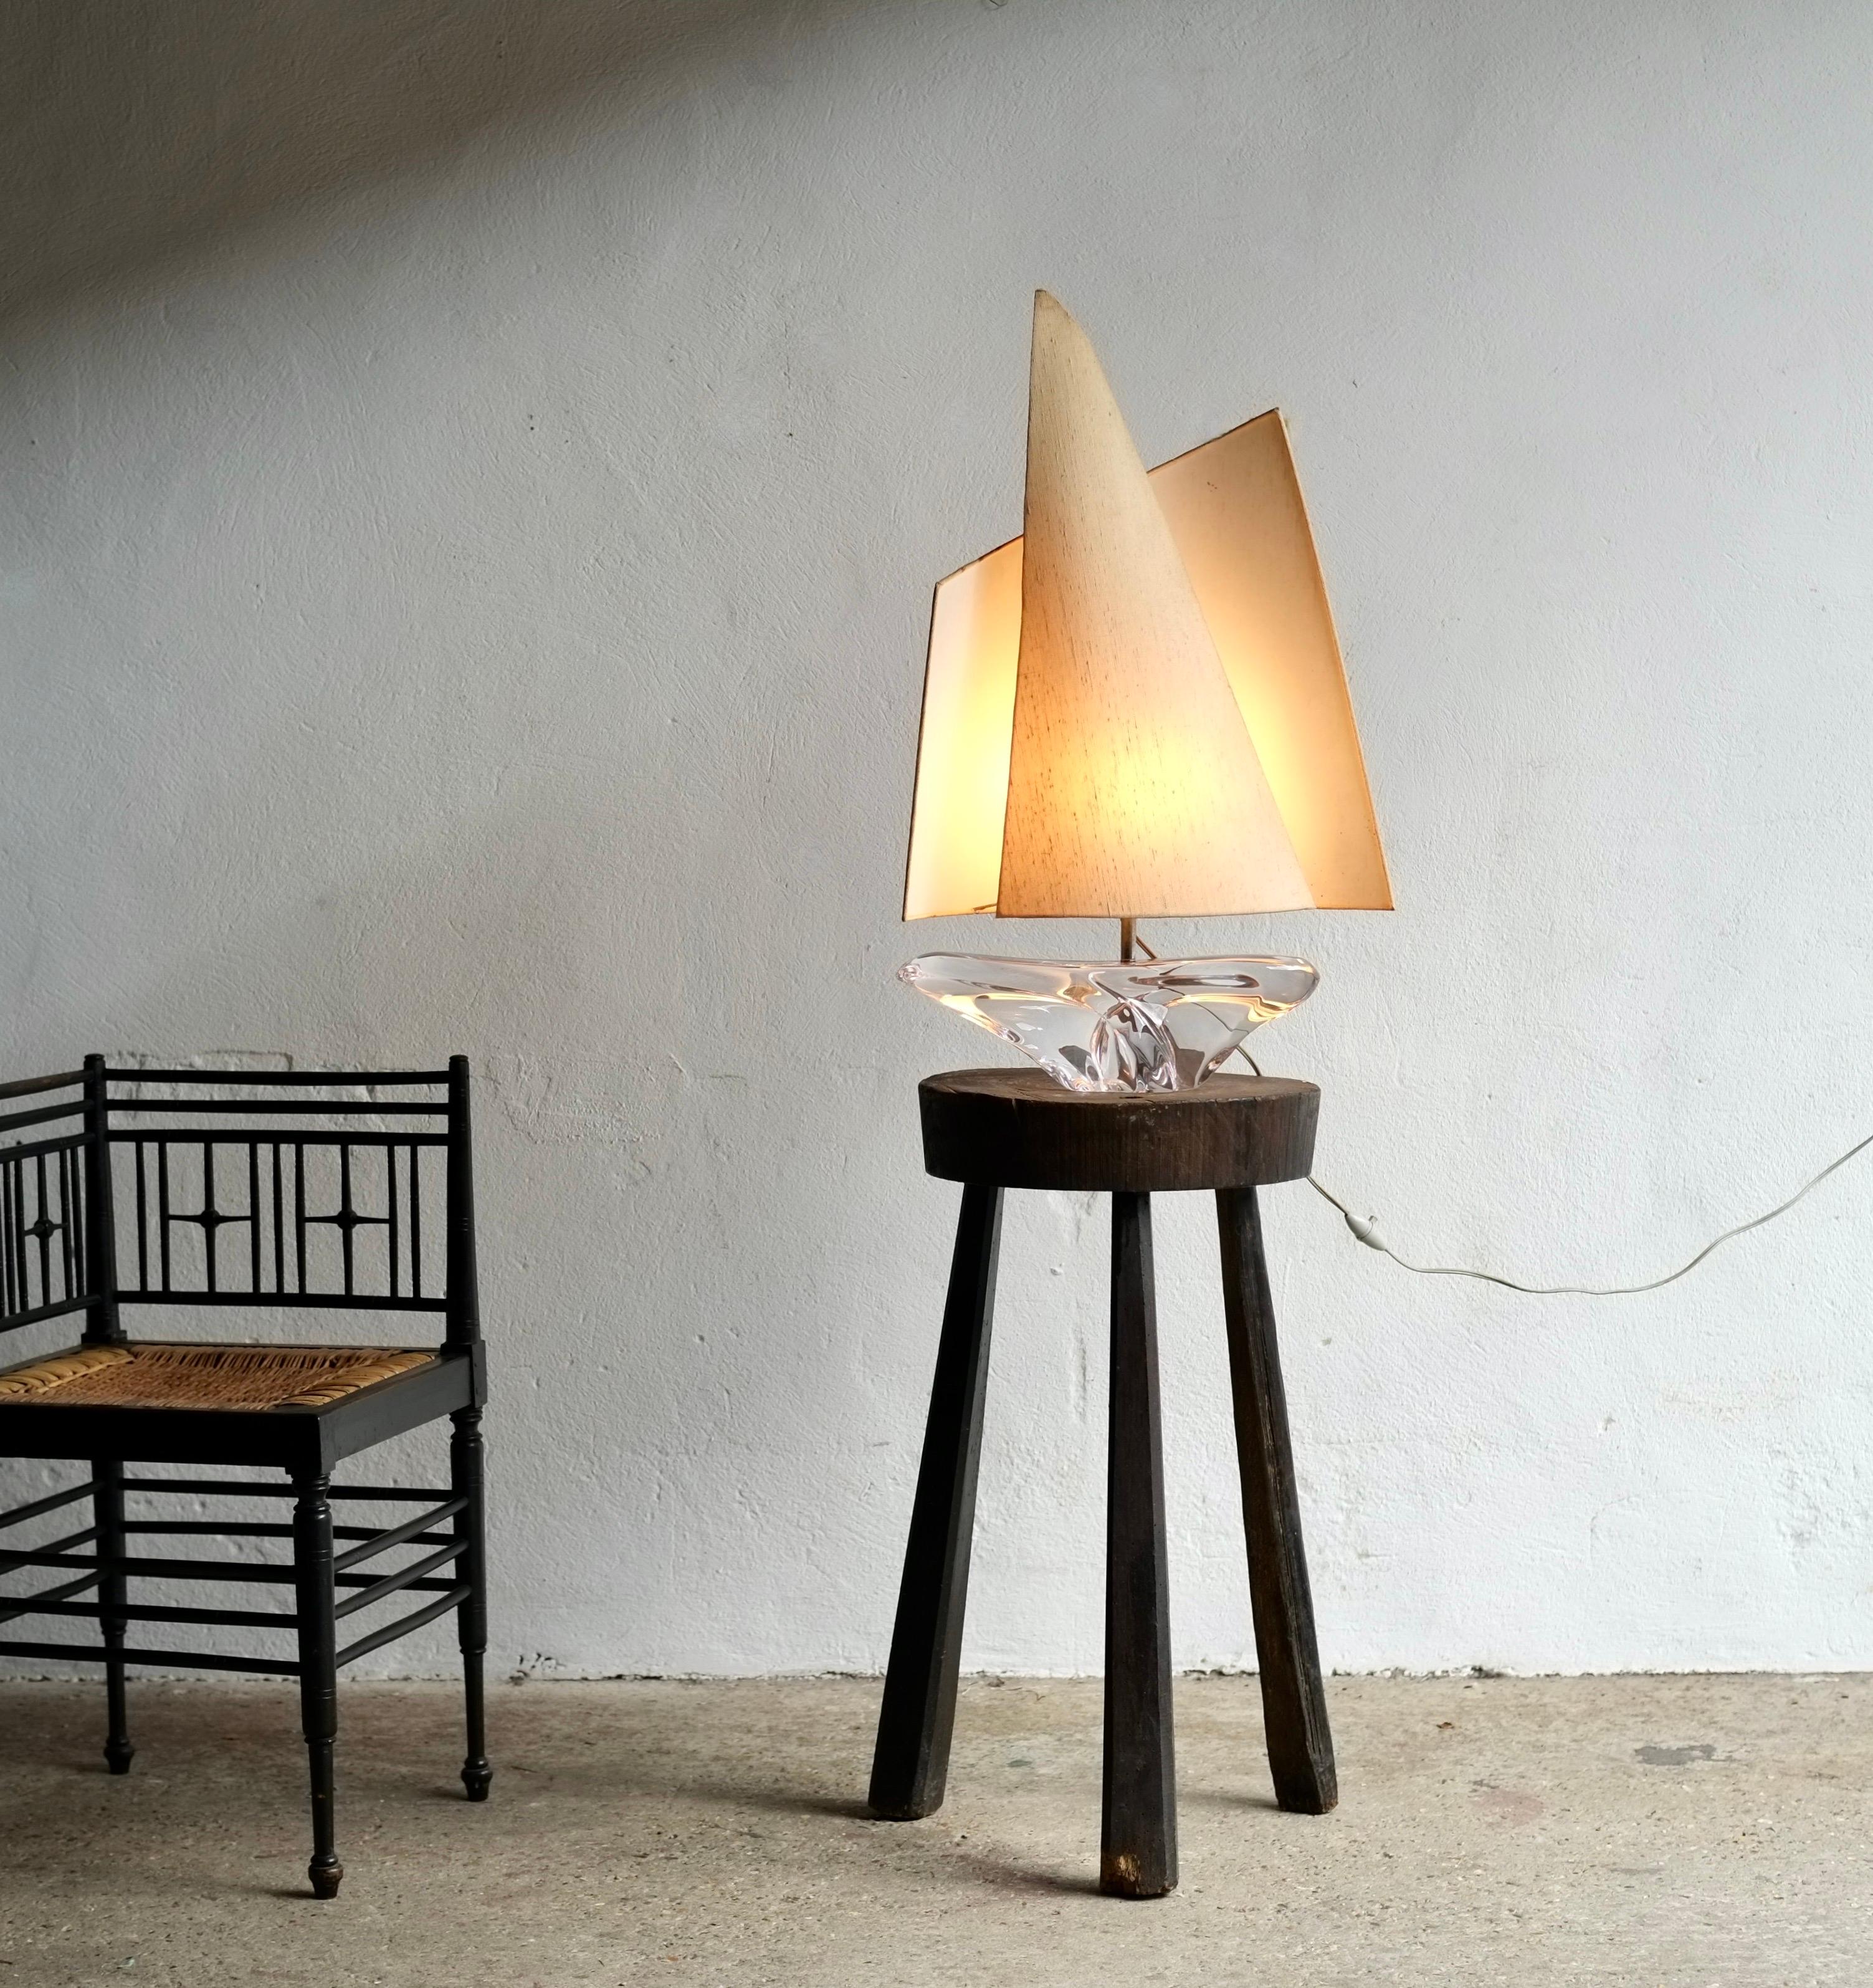 Daum Crystal Sailboat Lamp, 1960's, France For Sale 2